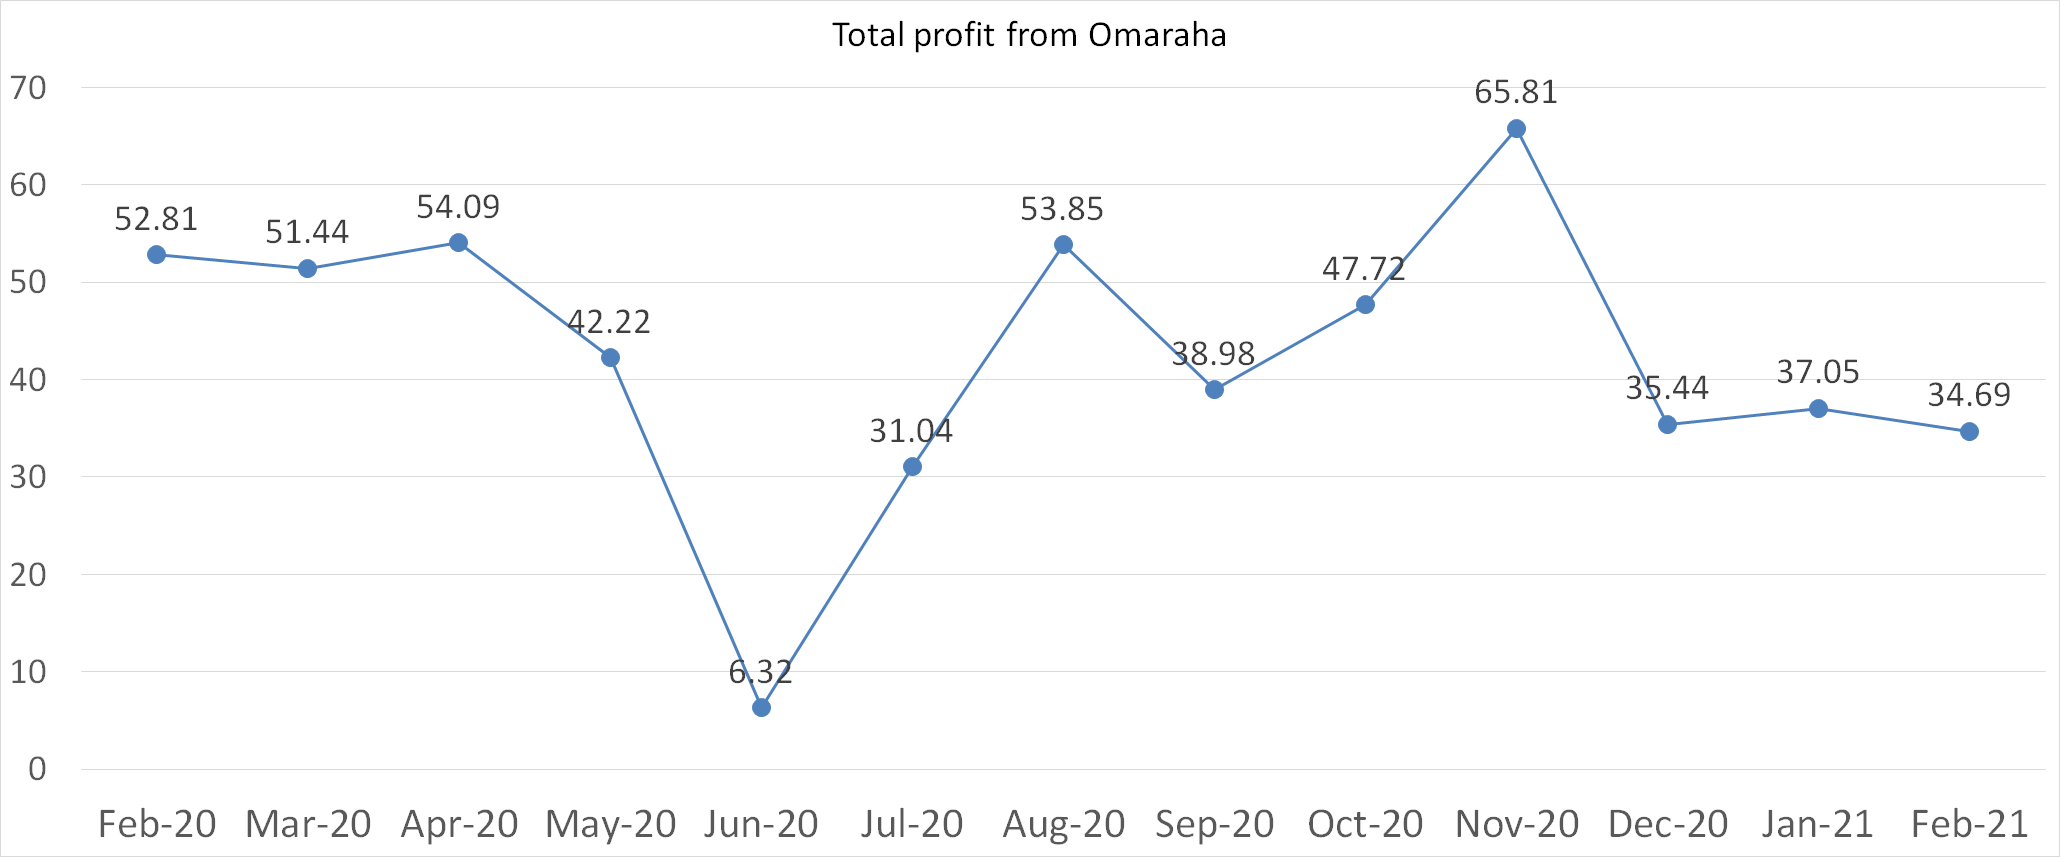 Total profit from Omaraha february 2021